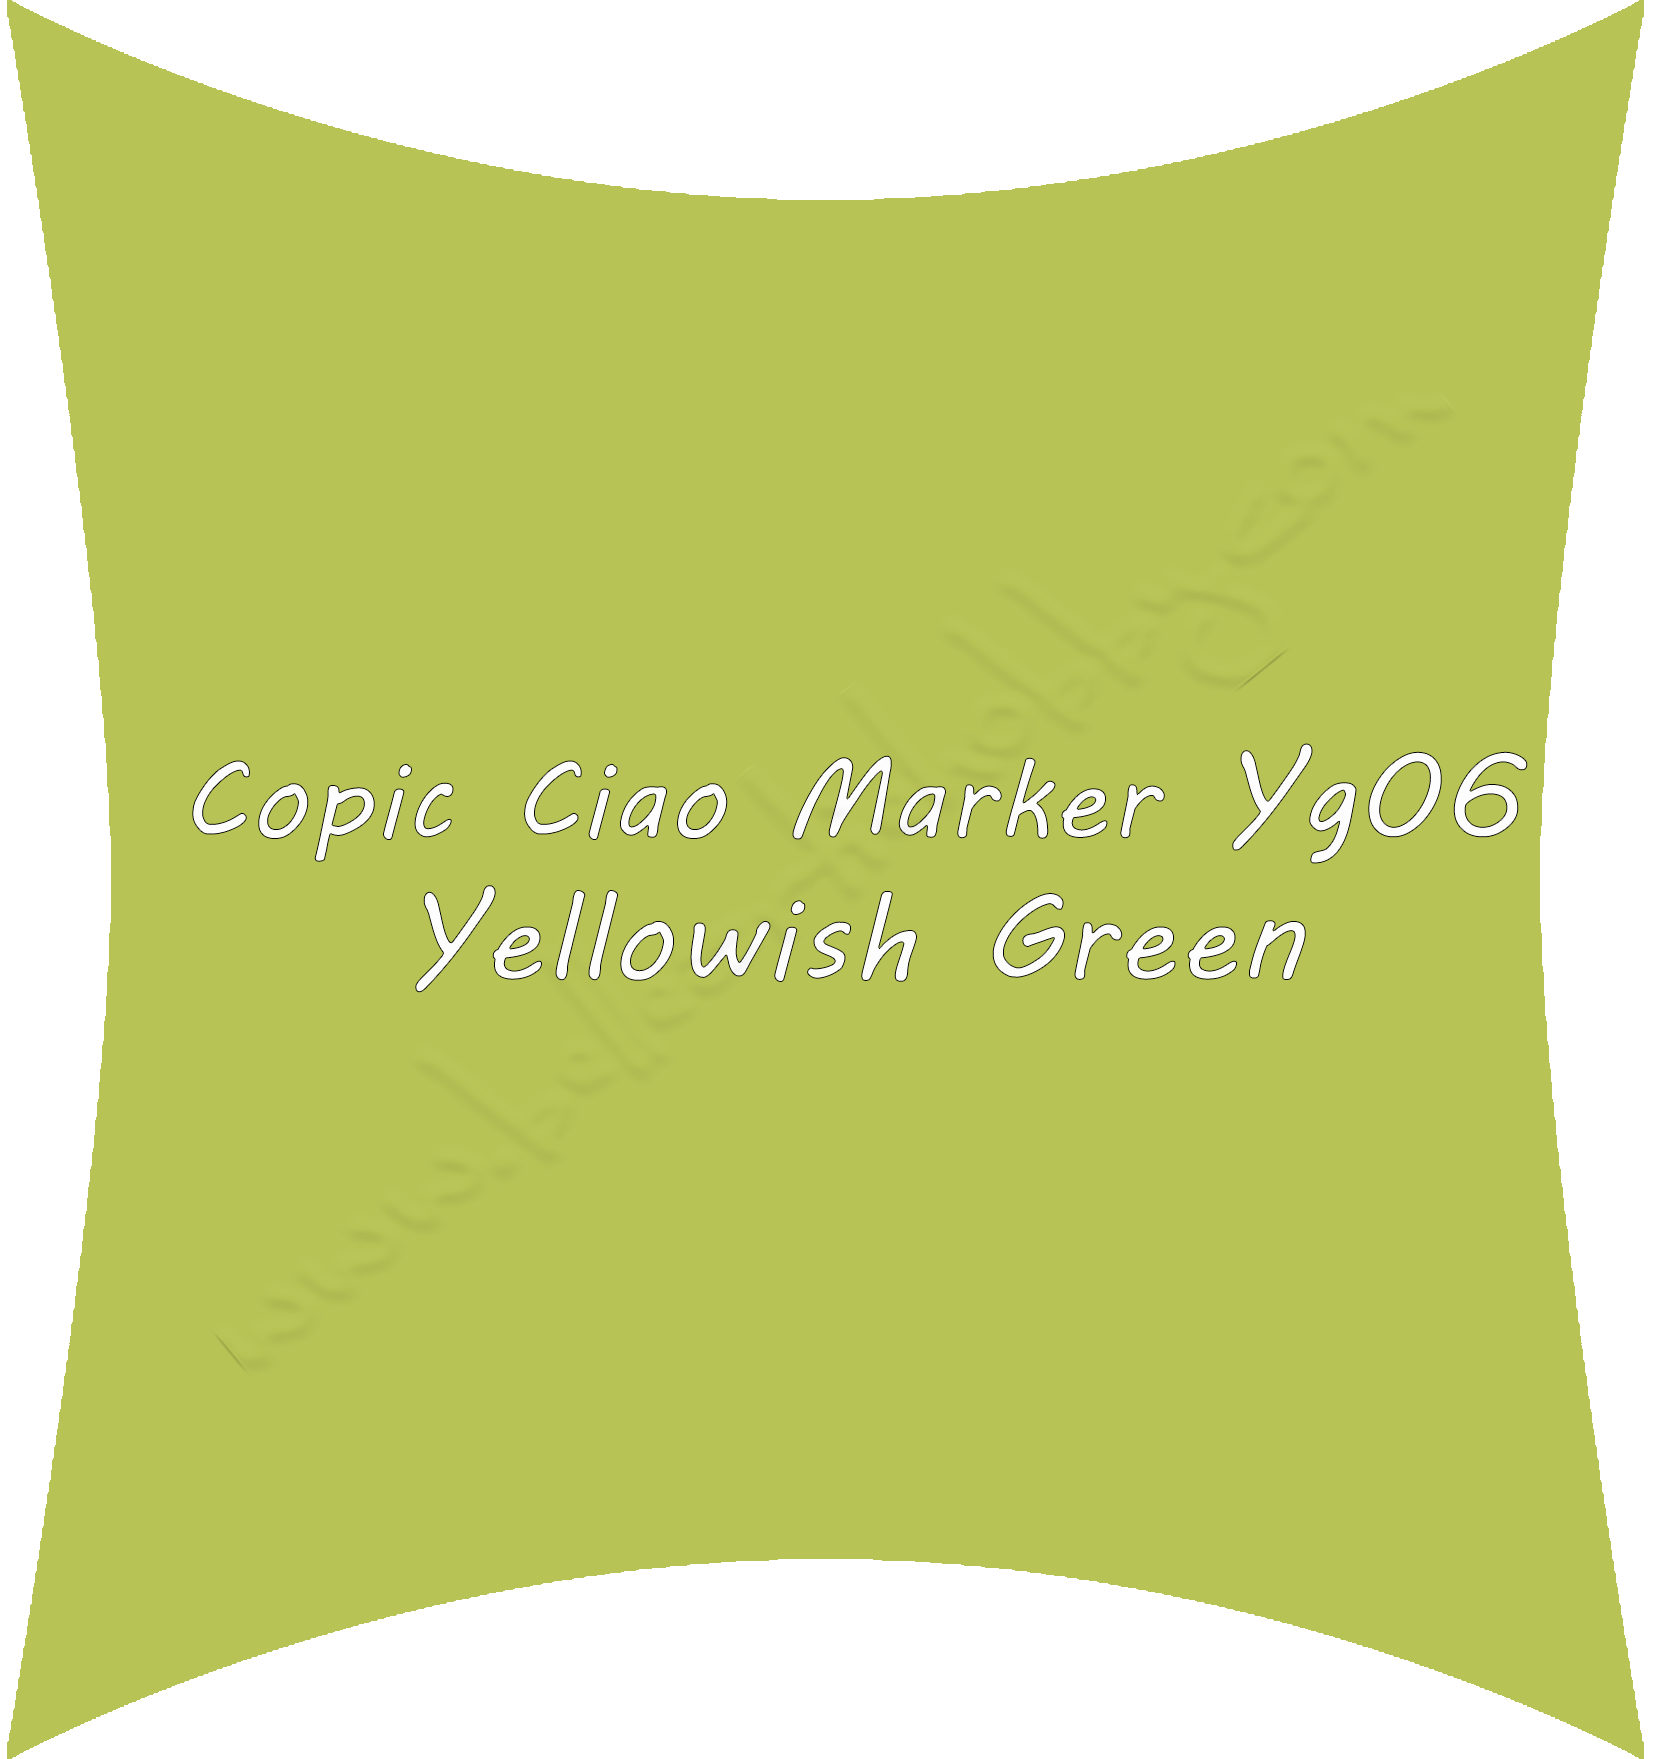 Yg06 Yellowish Green